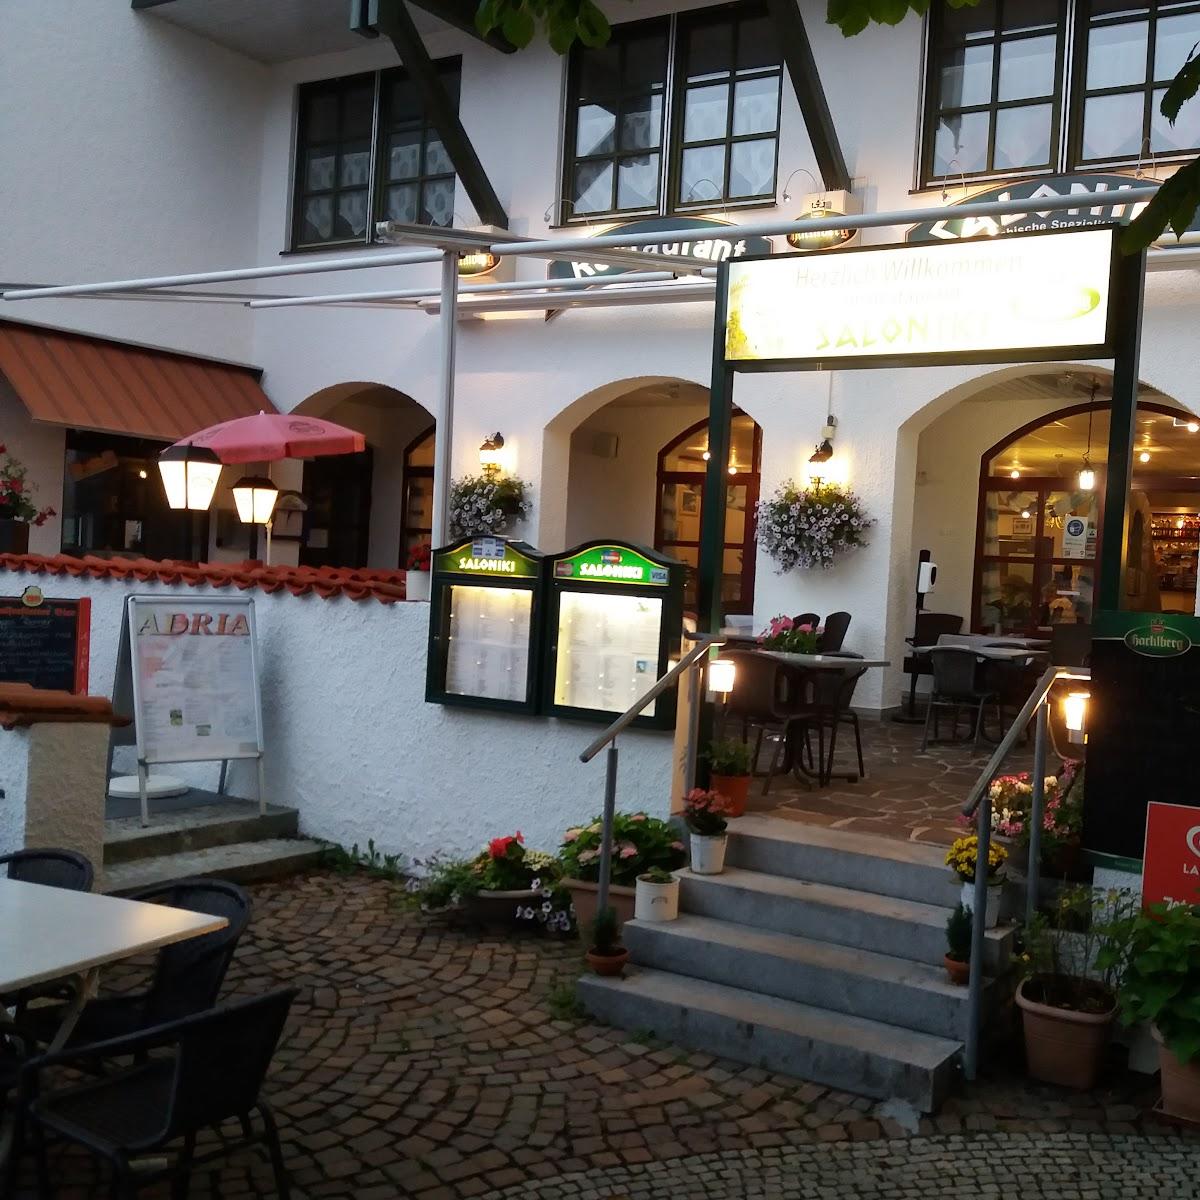 Restaurant "Winbeck Sebastian" in  Bayerbach